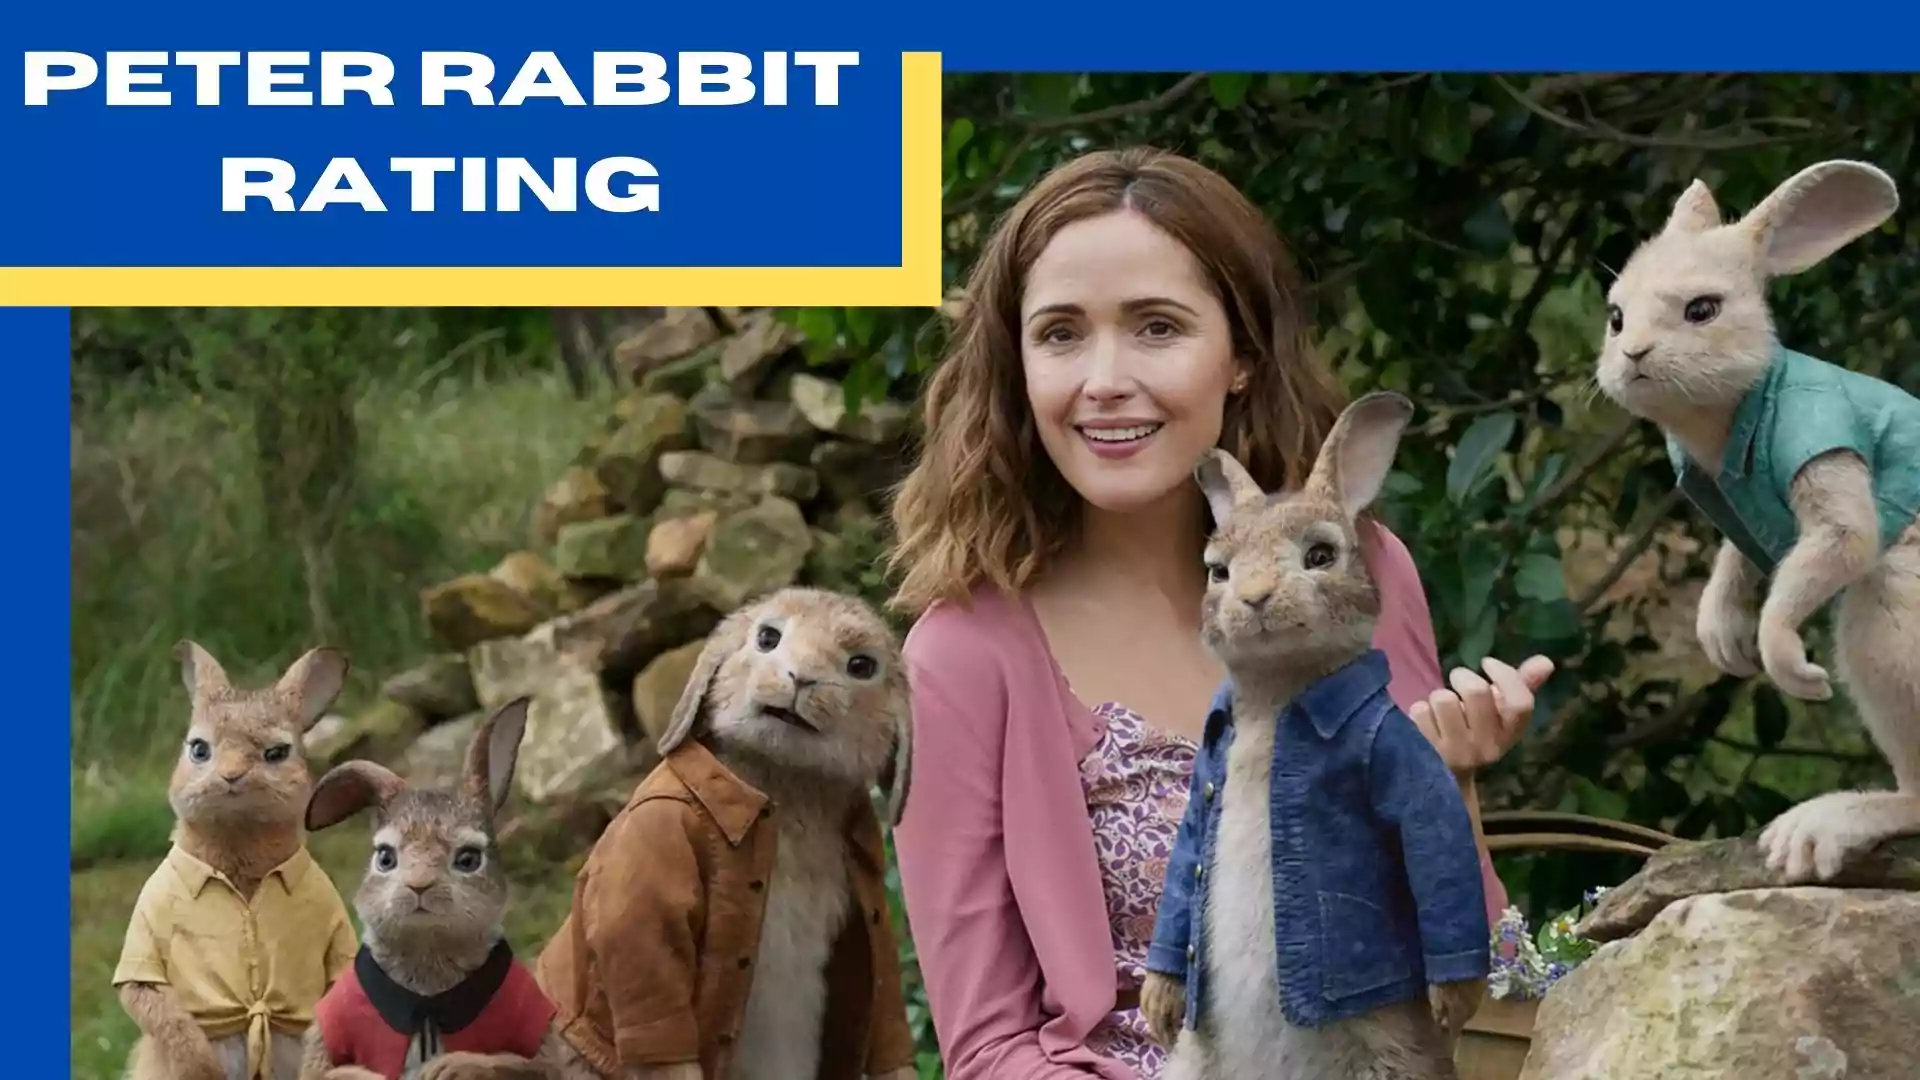 Peter Rabbit Rating. Peter Rabbit Age Rating. Peter Rabbit Parents Guide. 2018 film Peter Rabbit overview, trailer.